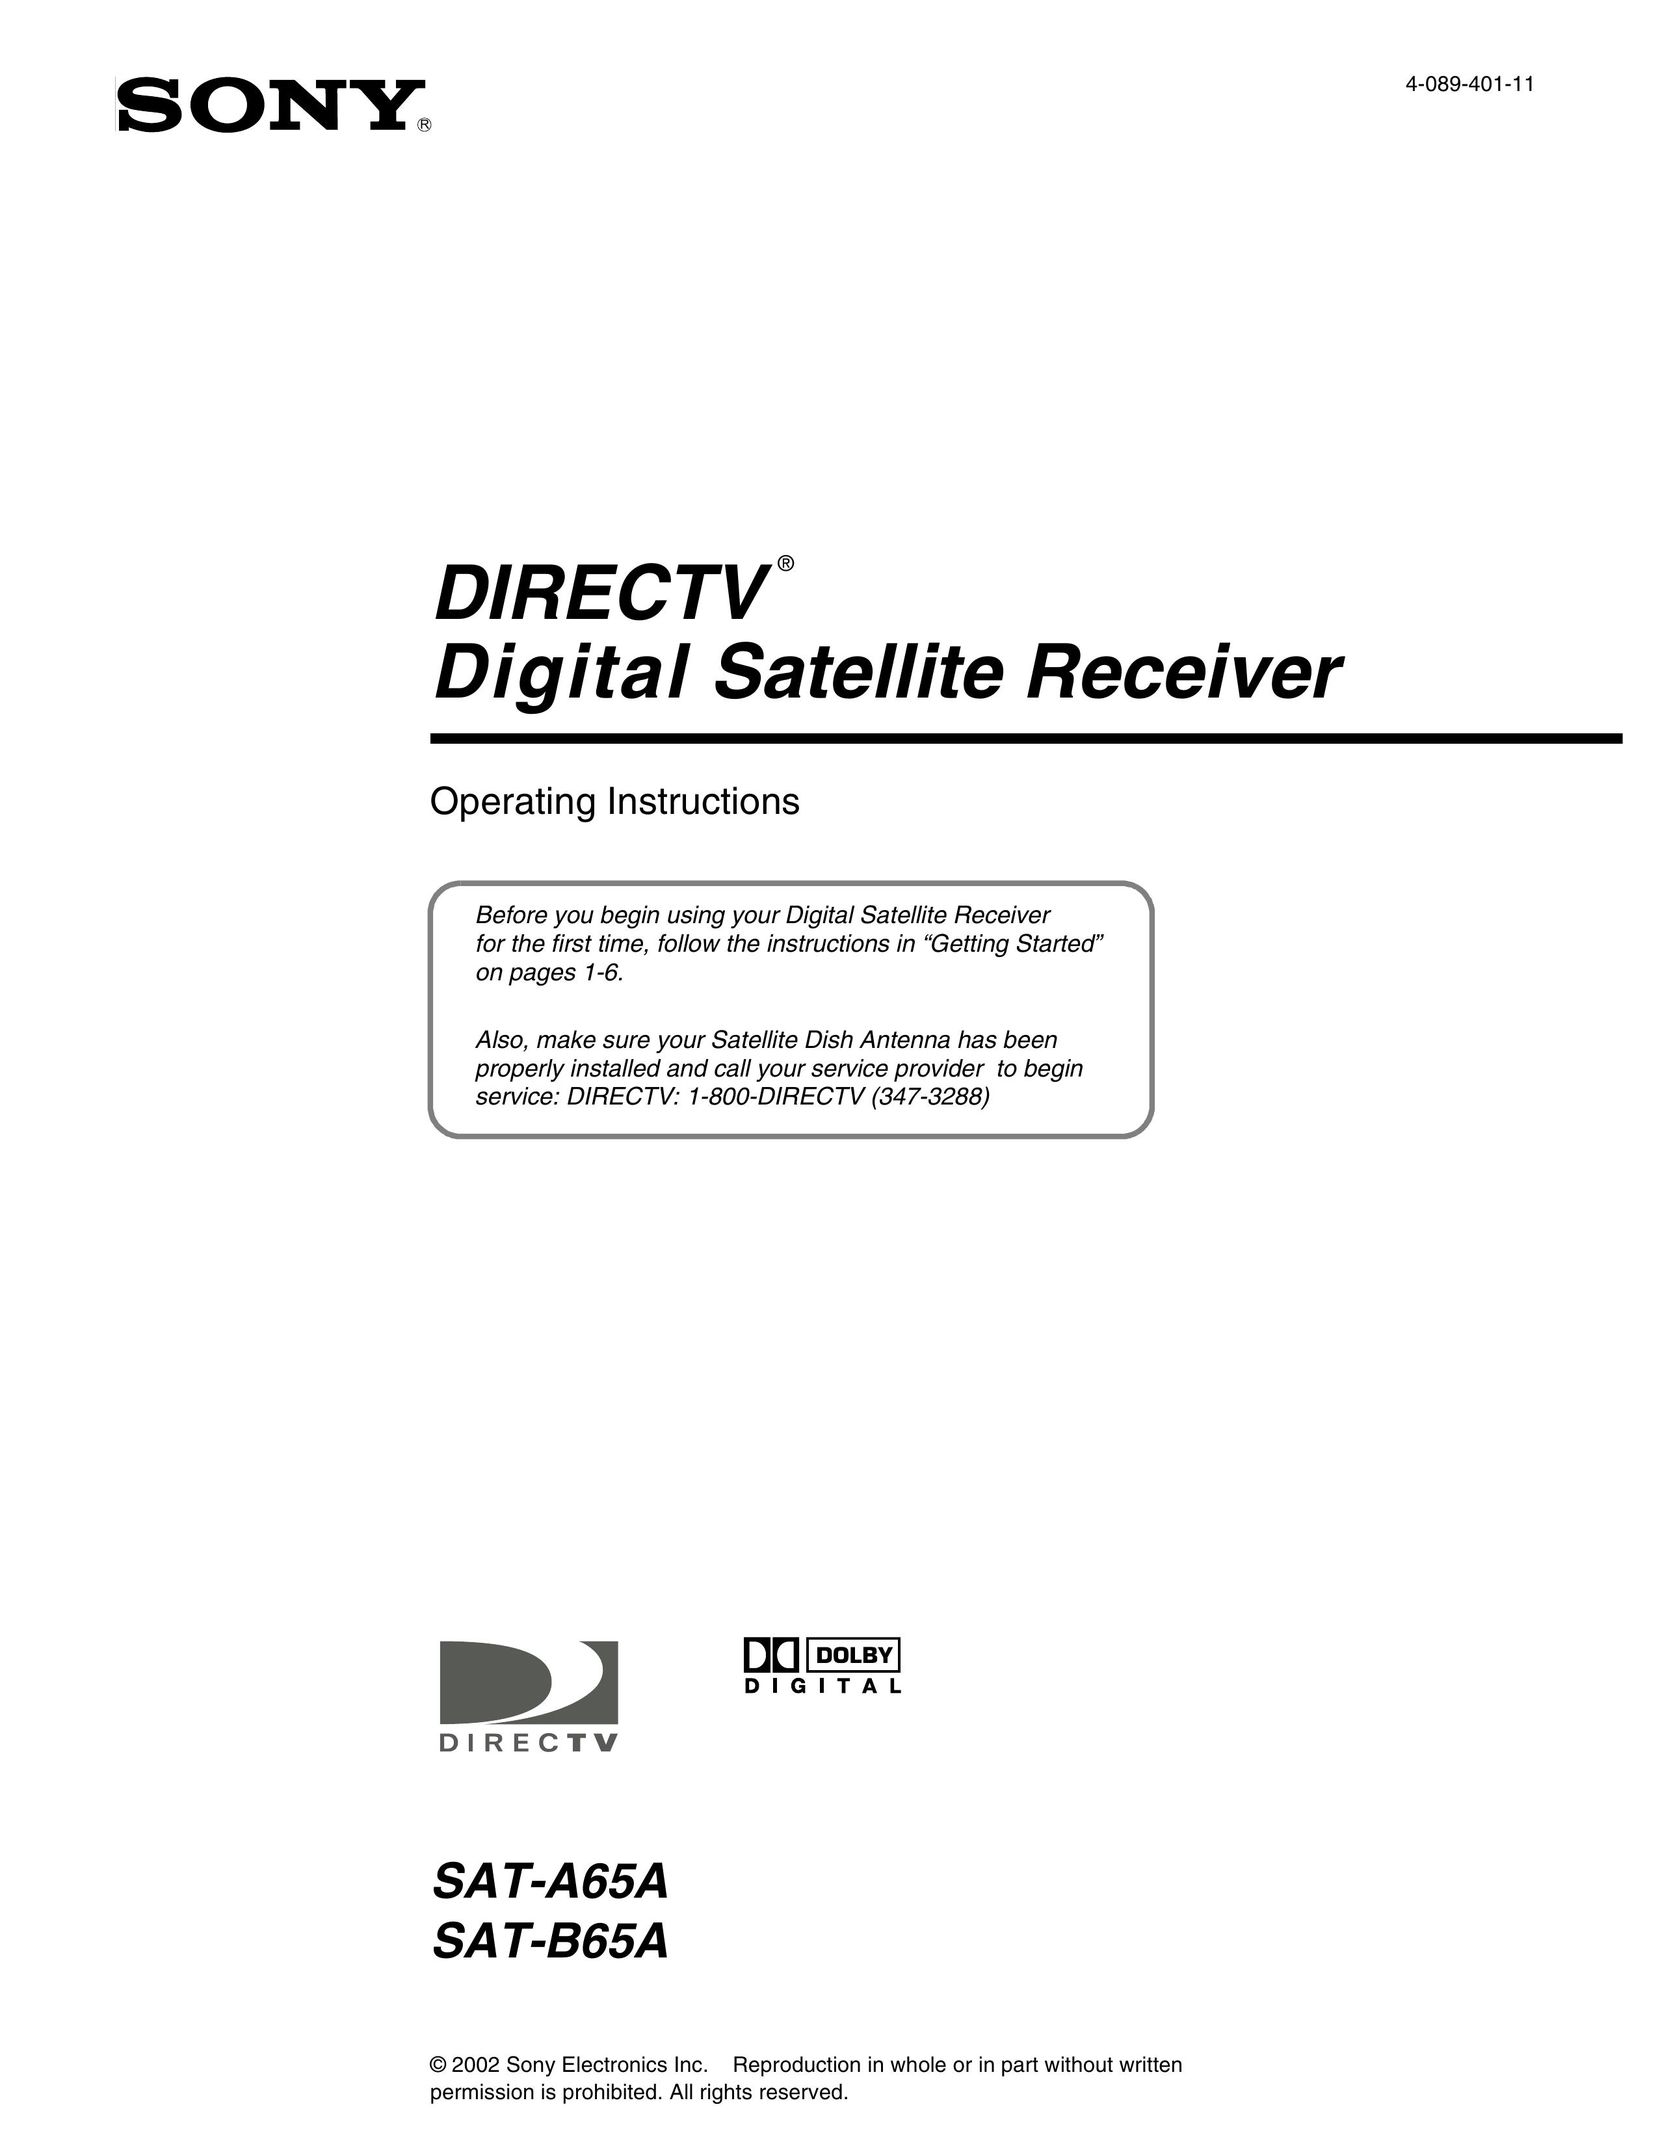 Sony SAT-B65A Satellite TV System User Manual